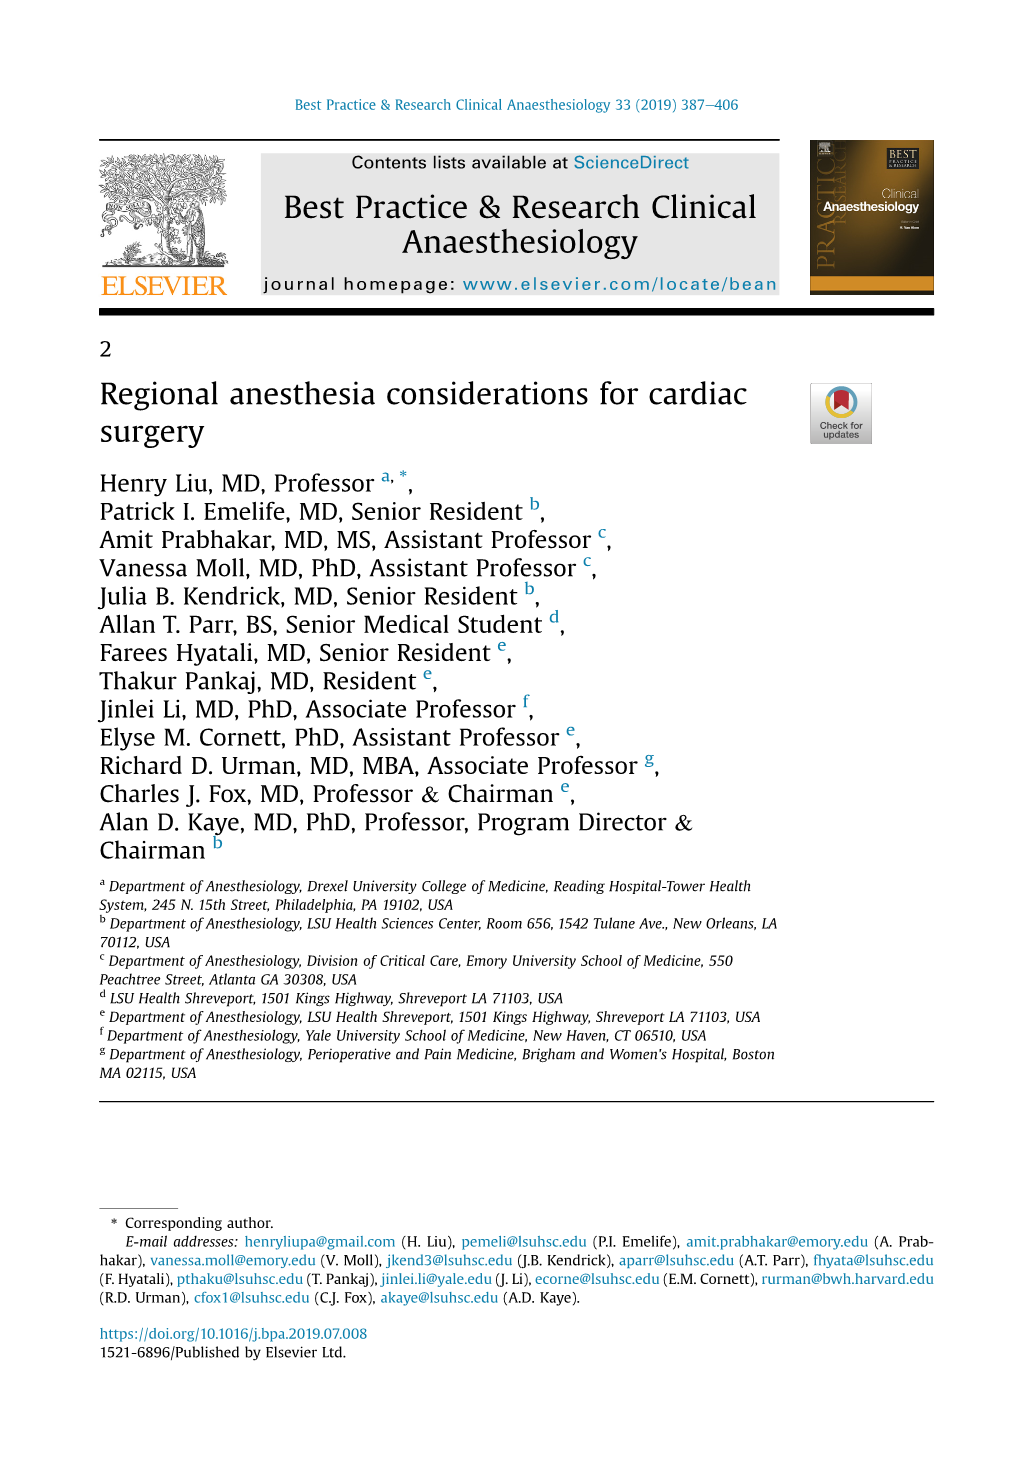 Regional Anesthesia Considerations for Cardiac Surgery